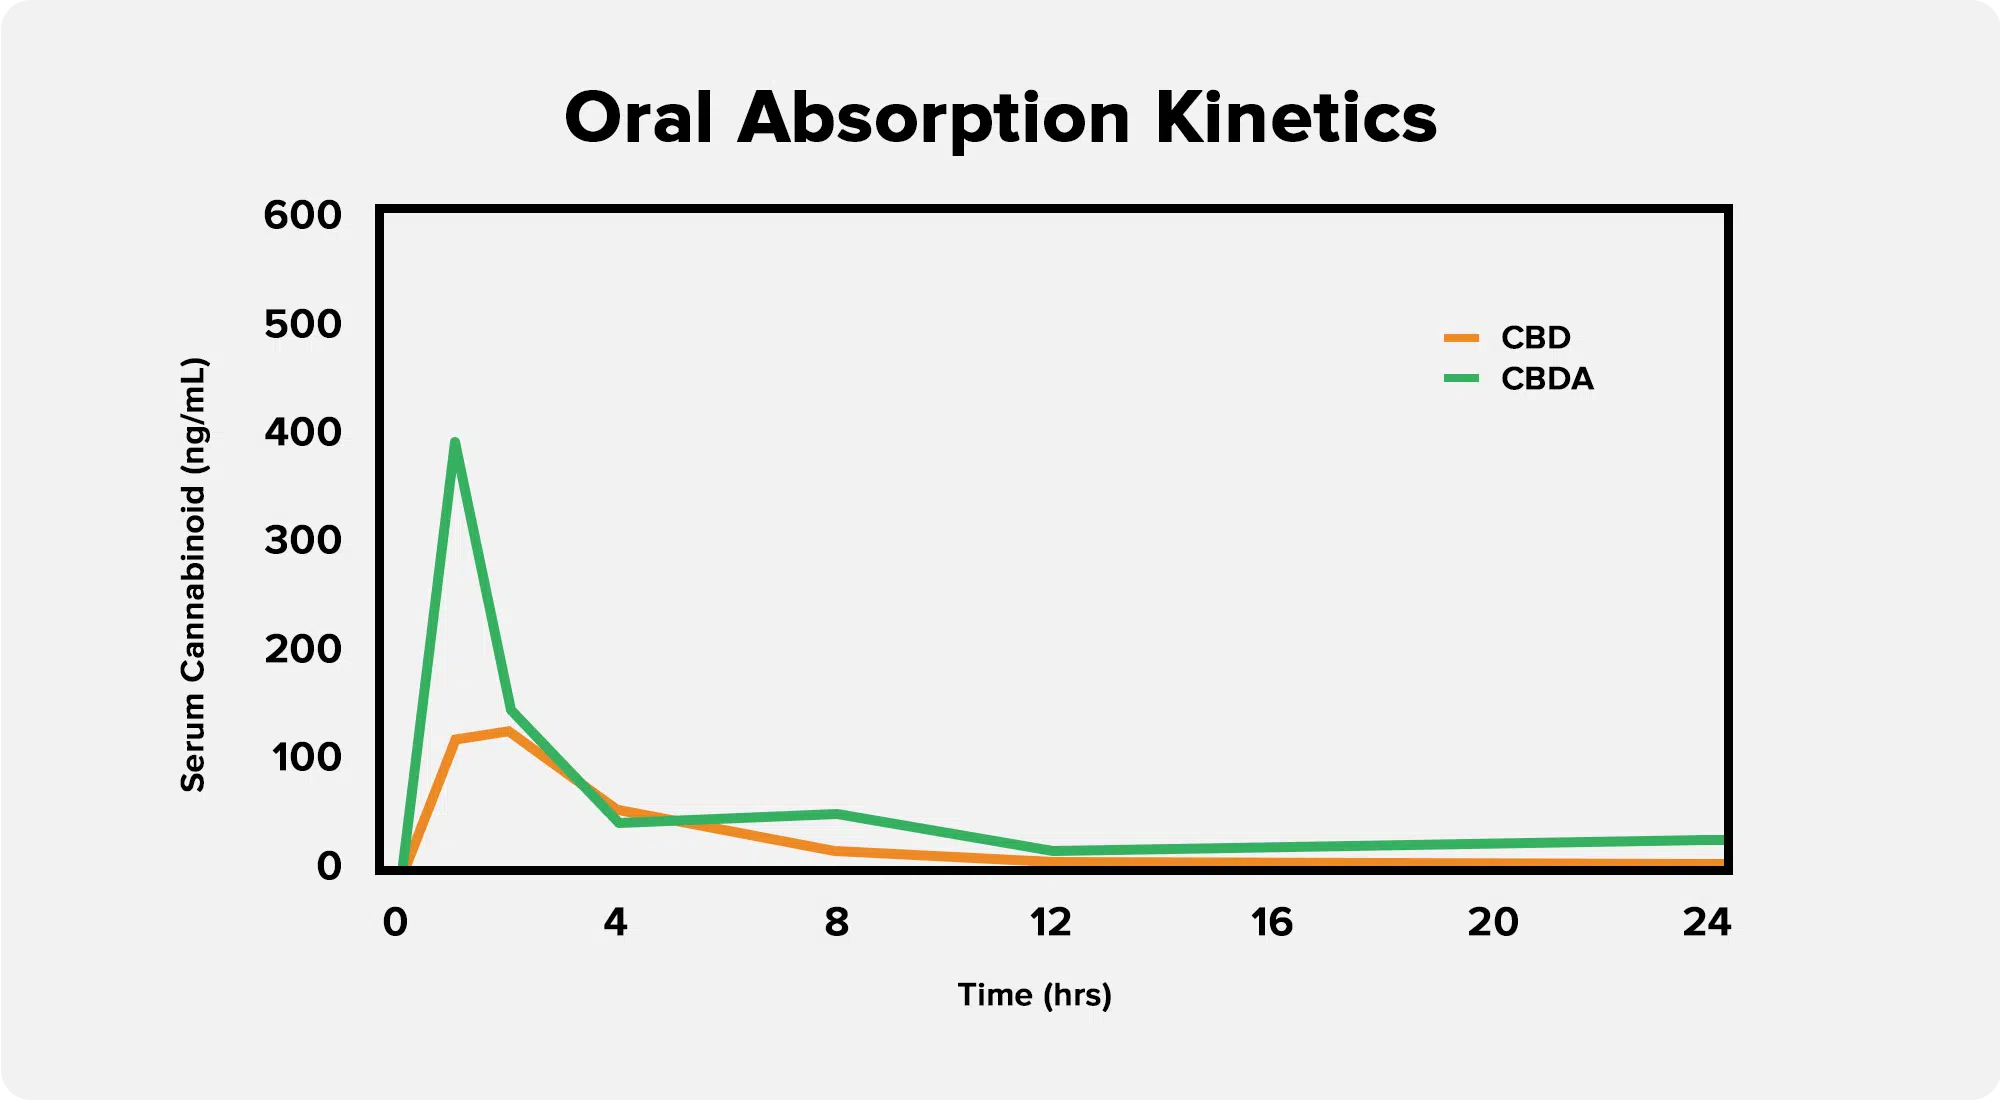 cbda oral absorption